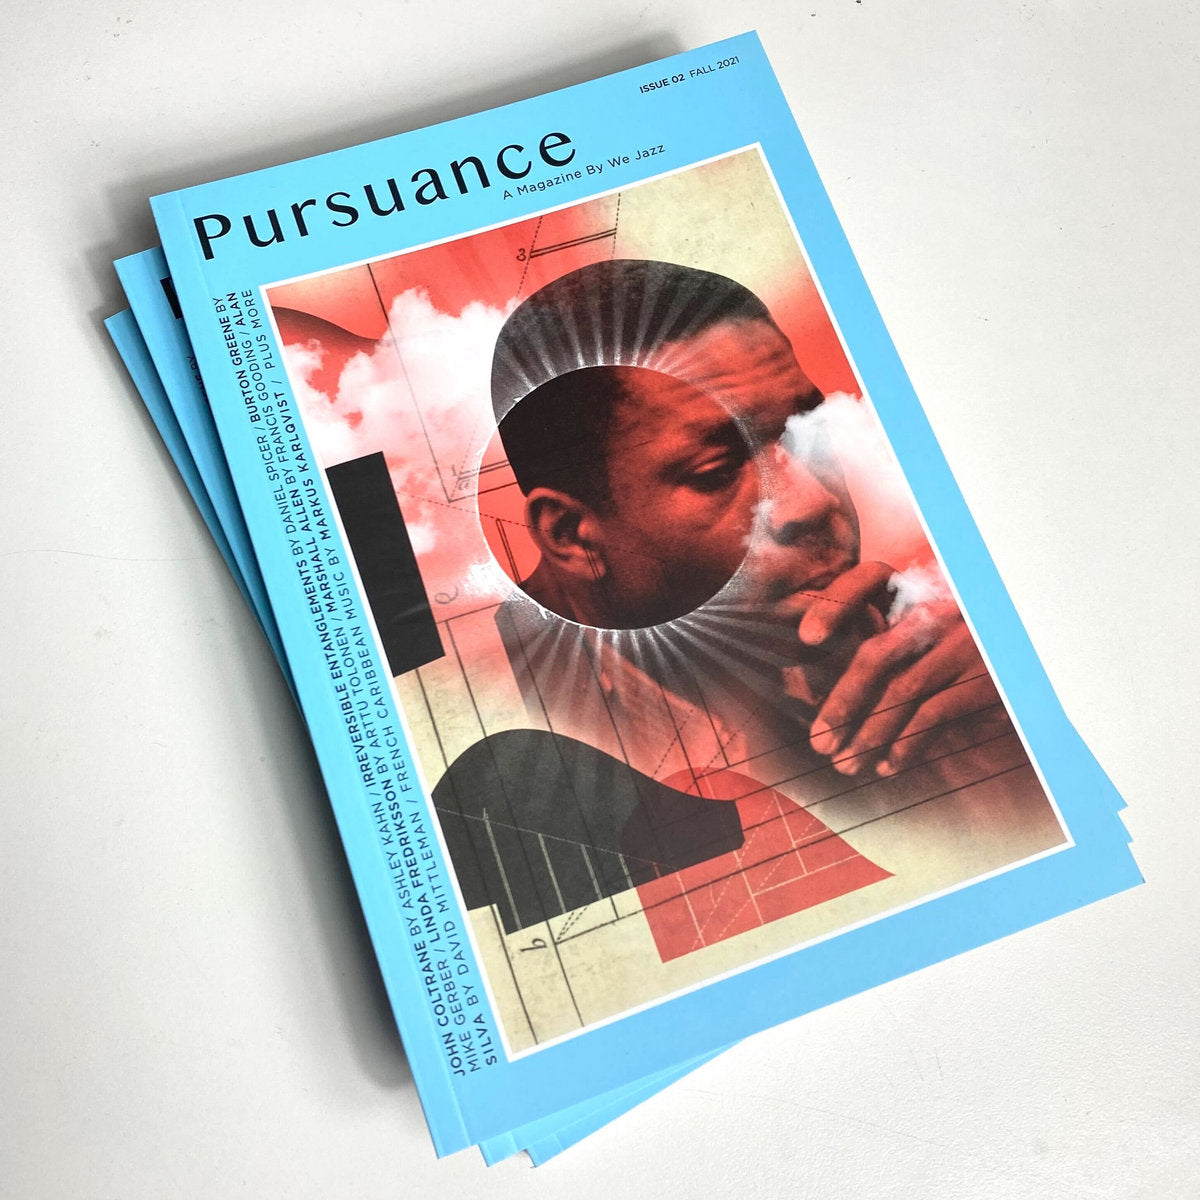 We Jazz Magazine - Issue 2 "Pursuance"